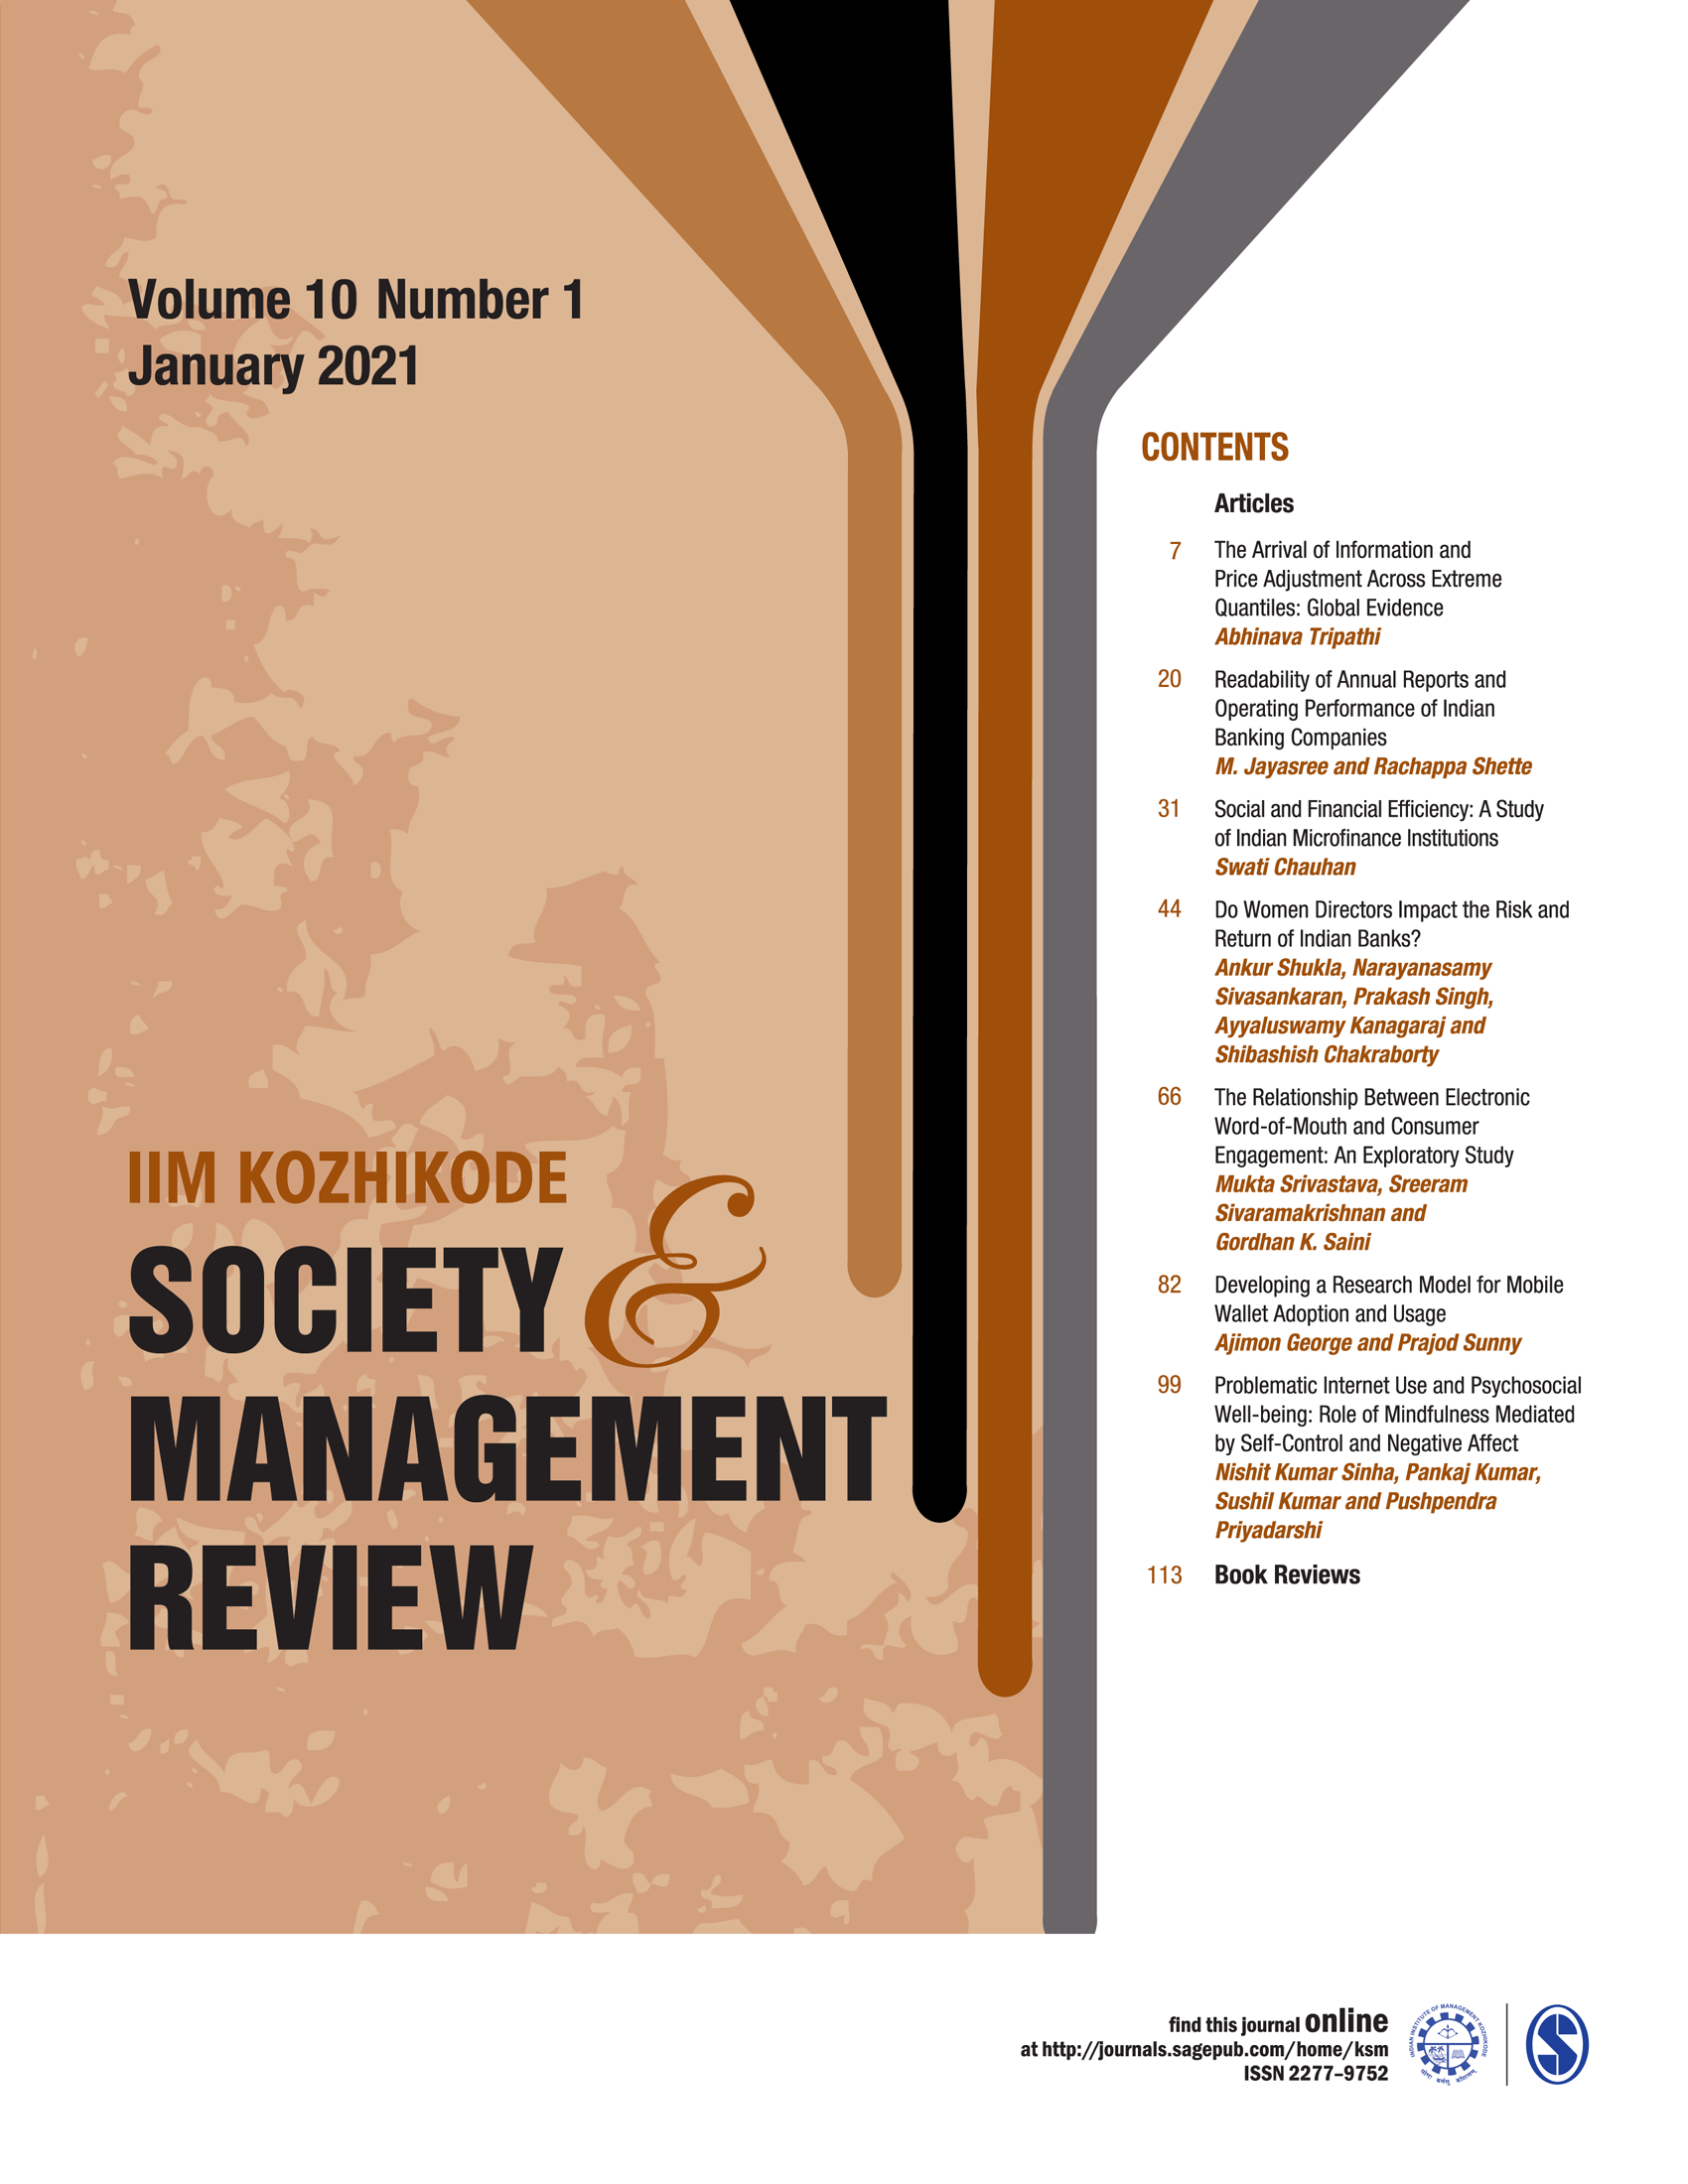 IIM Kozhikode Society & Management Review